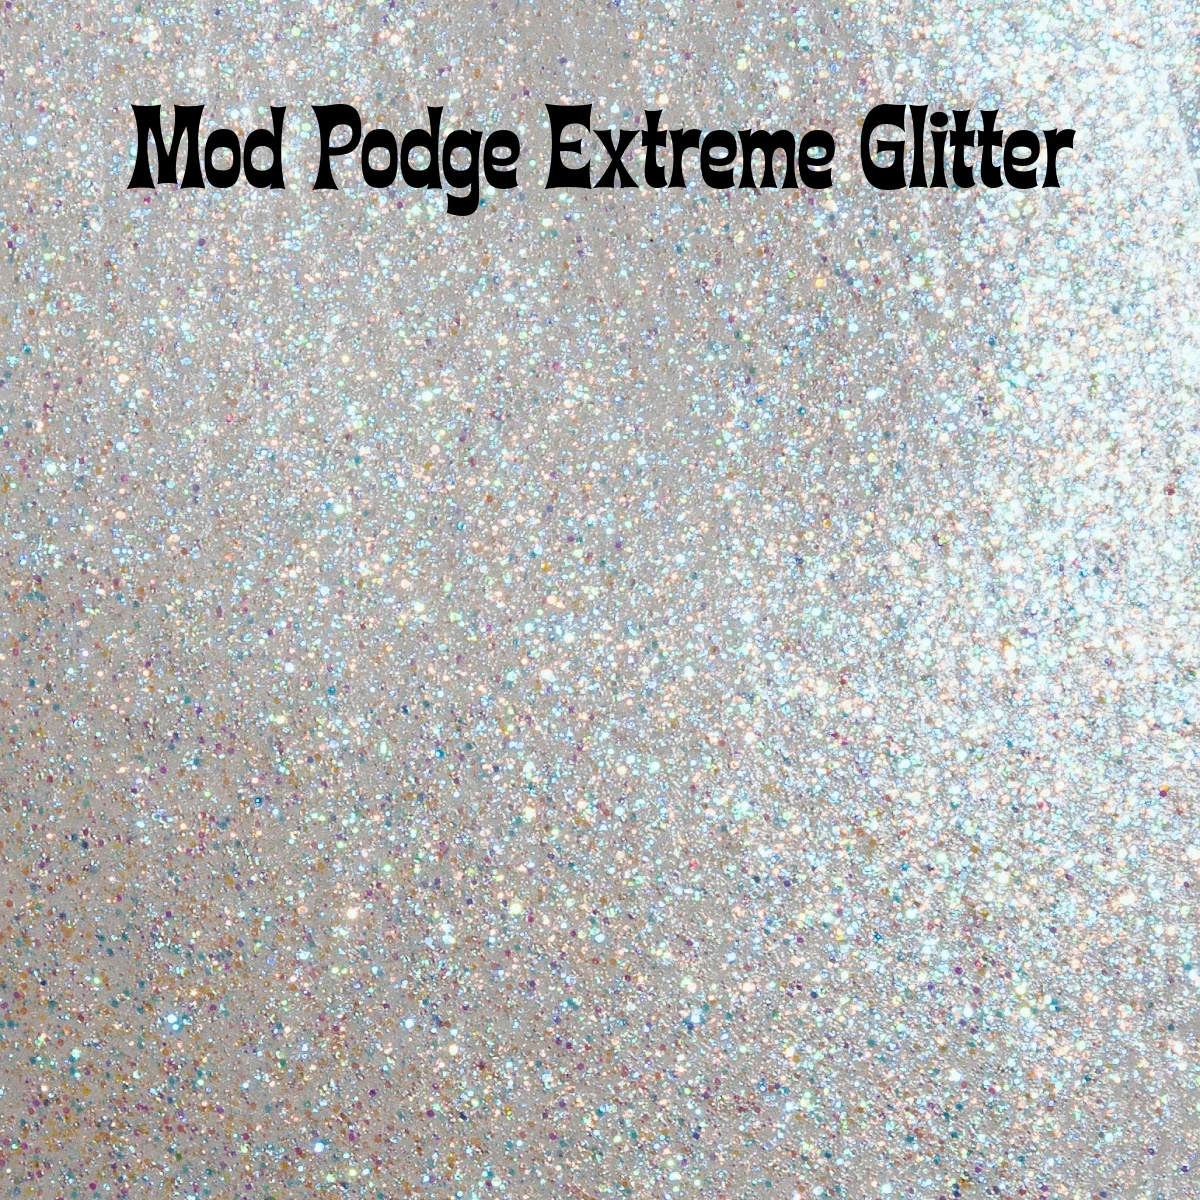 How to Make Mod Podge Extreme Glitter Skins 